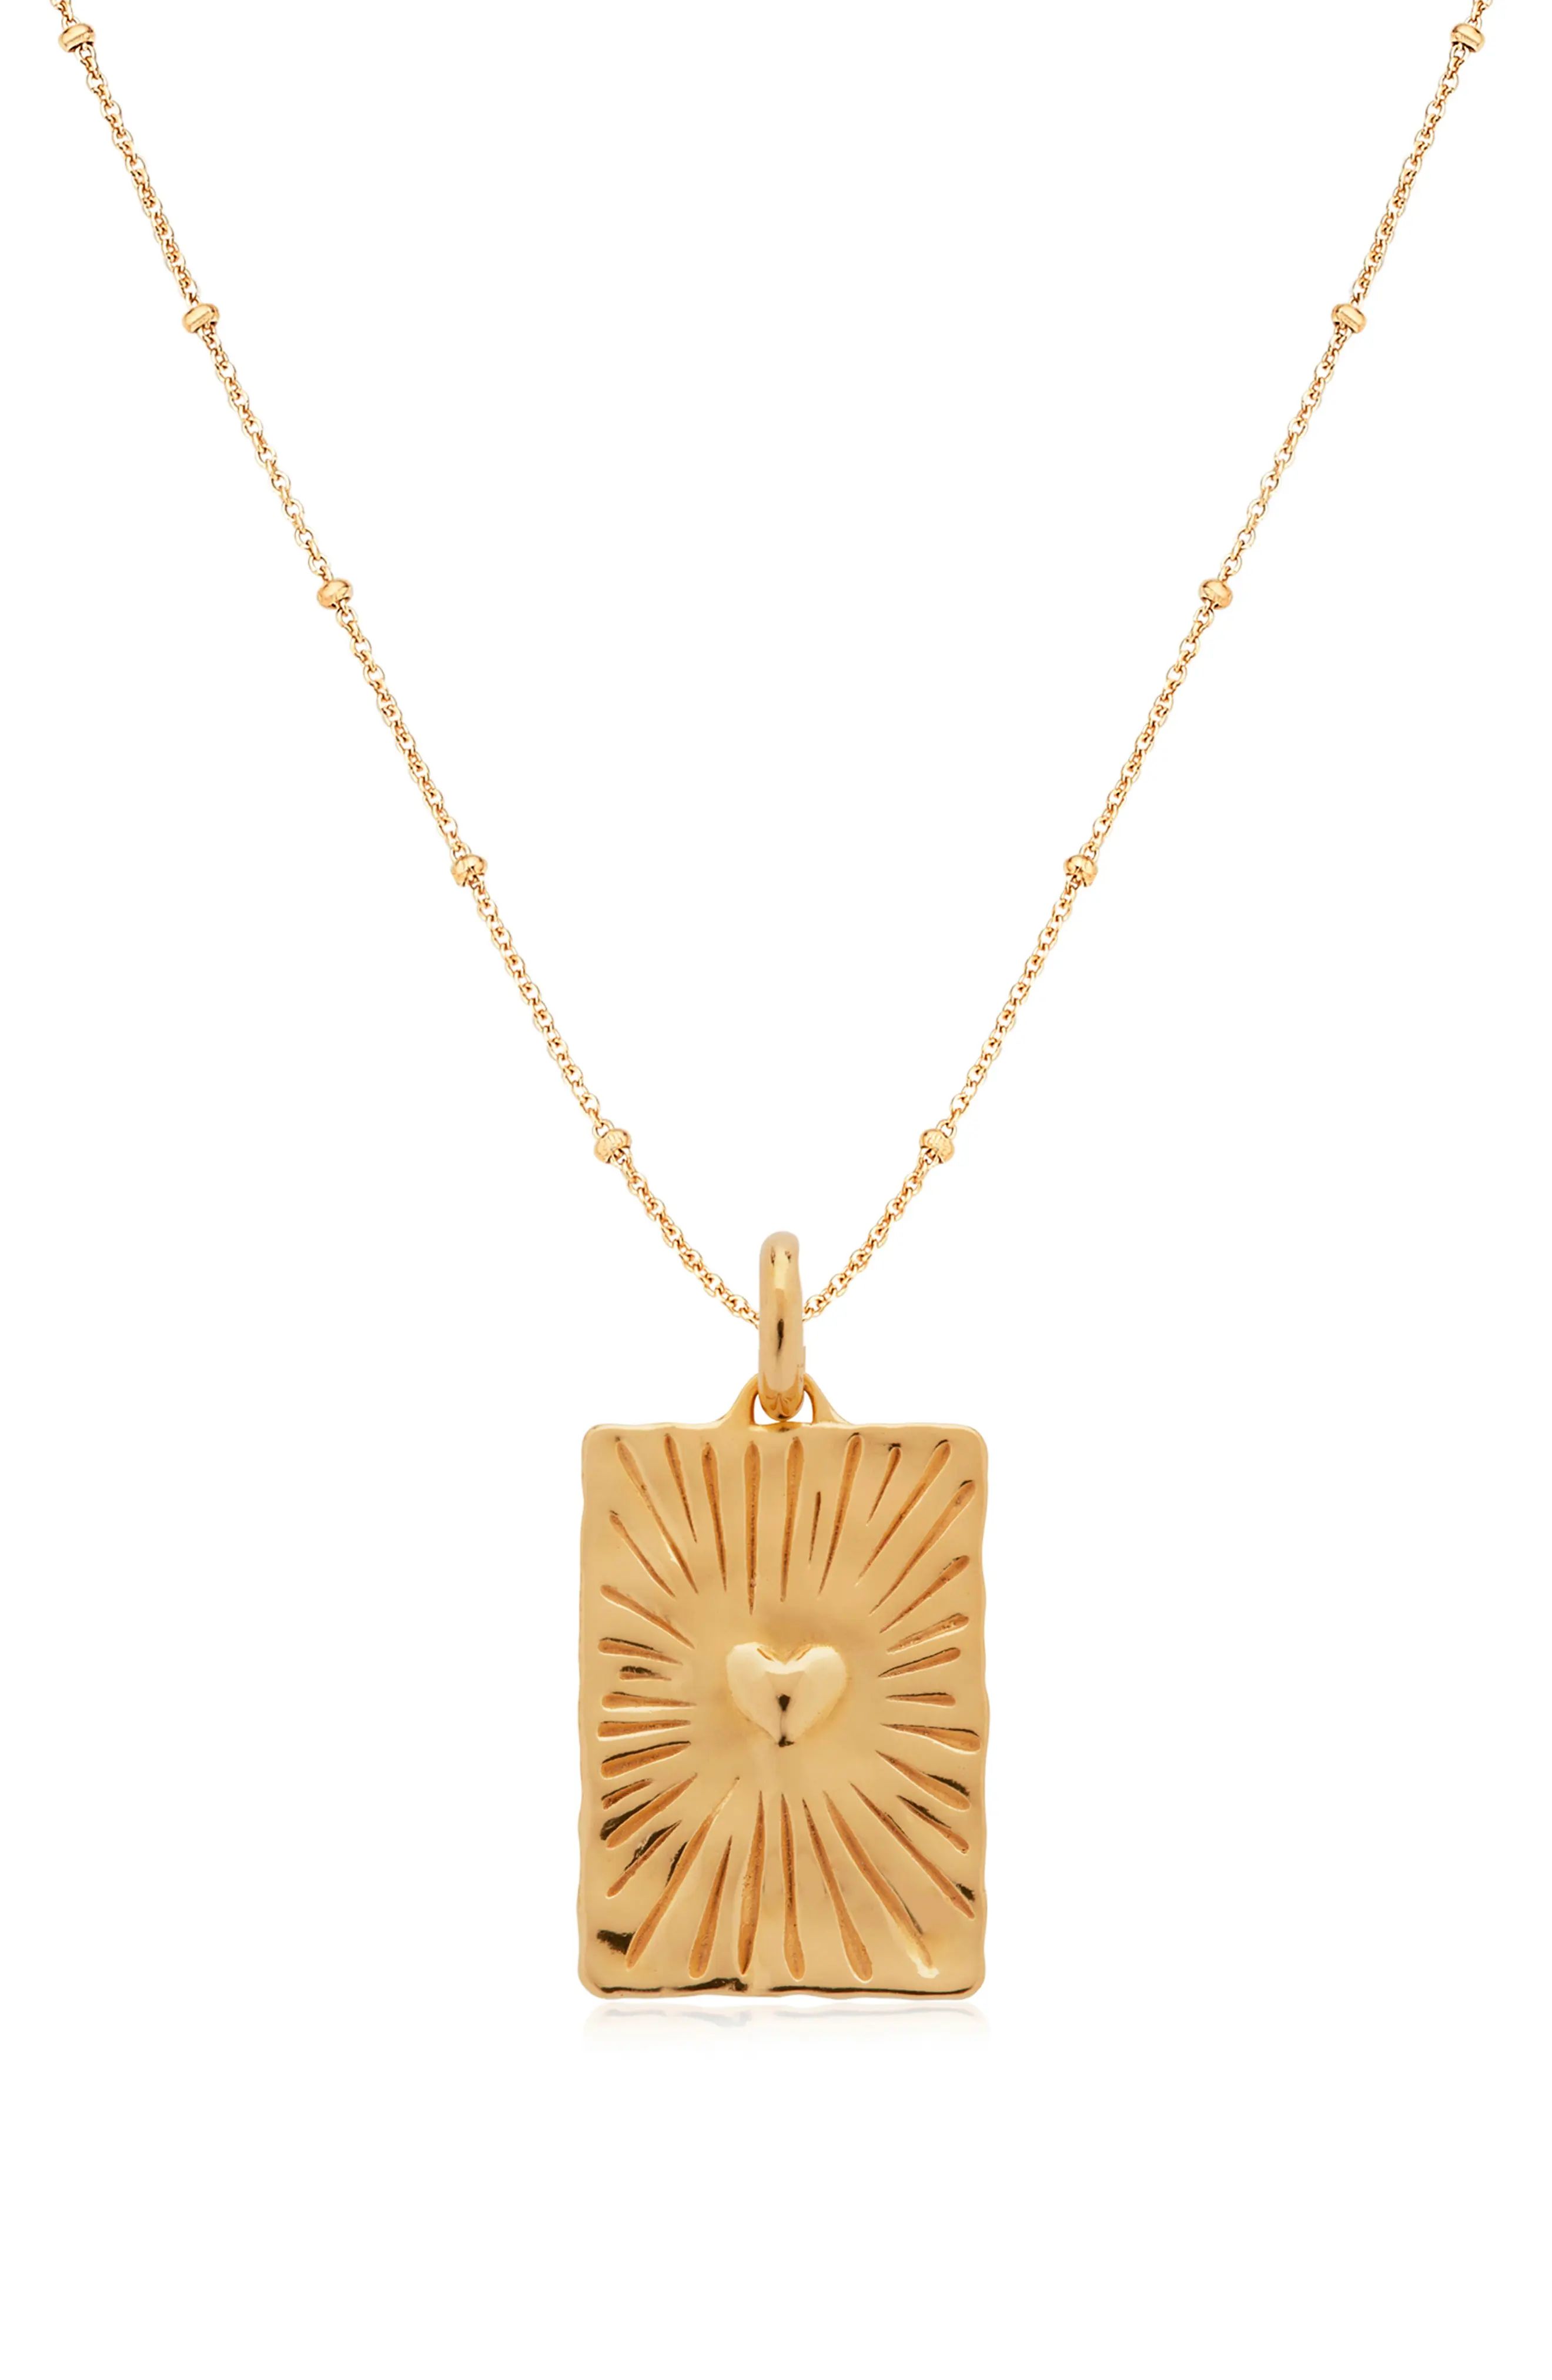 Monica Vinader Talisman Heart Pendant Necklace in 18Ct Gold Vermeil/Silver at Nordstrom | Nordstrom